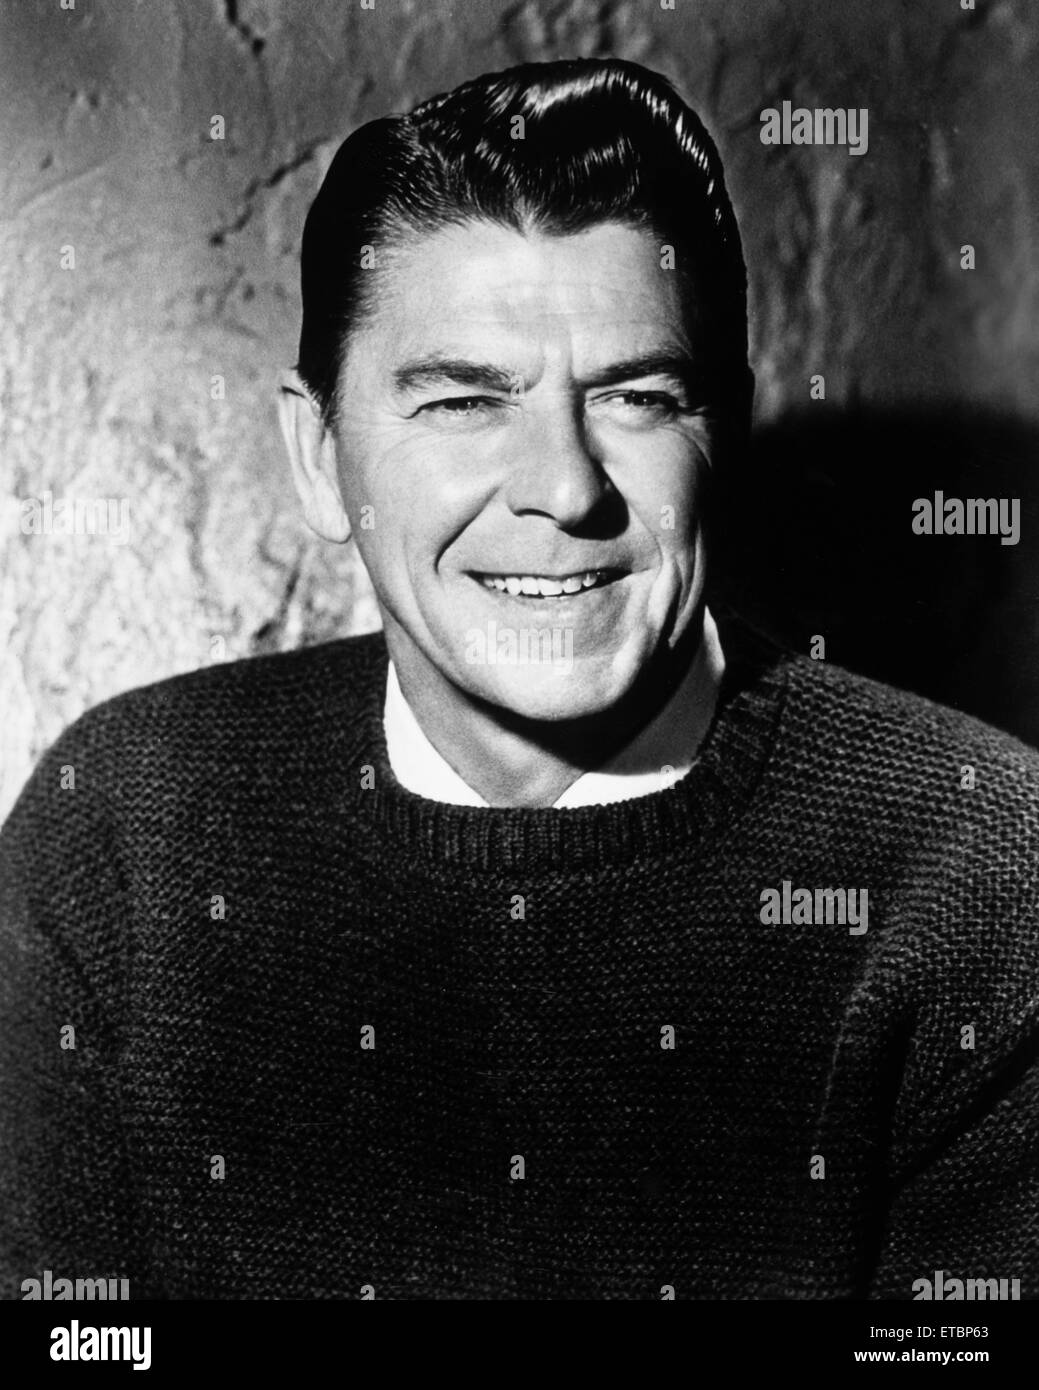 Ronald Reagan, Werbung Portrait aus dem Film "The Killers", 1964 Stockfoto